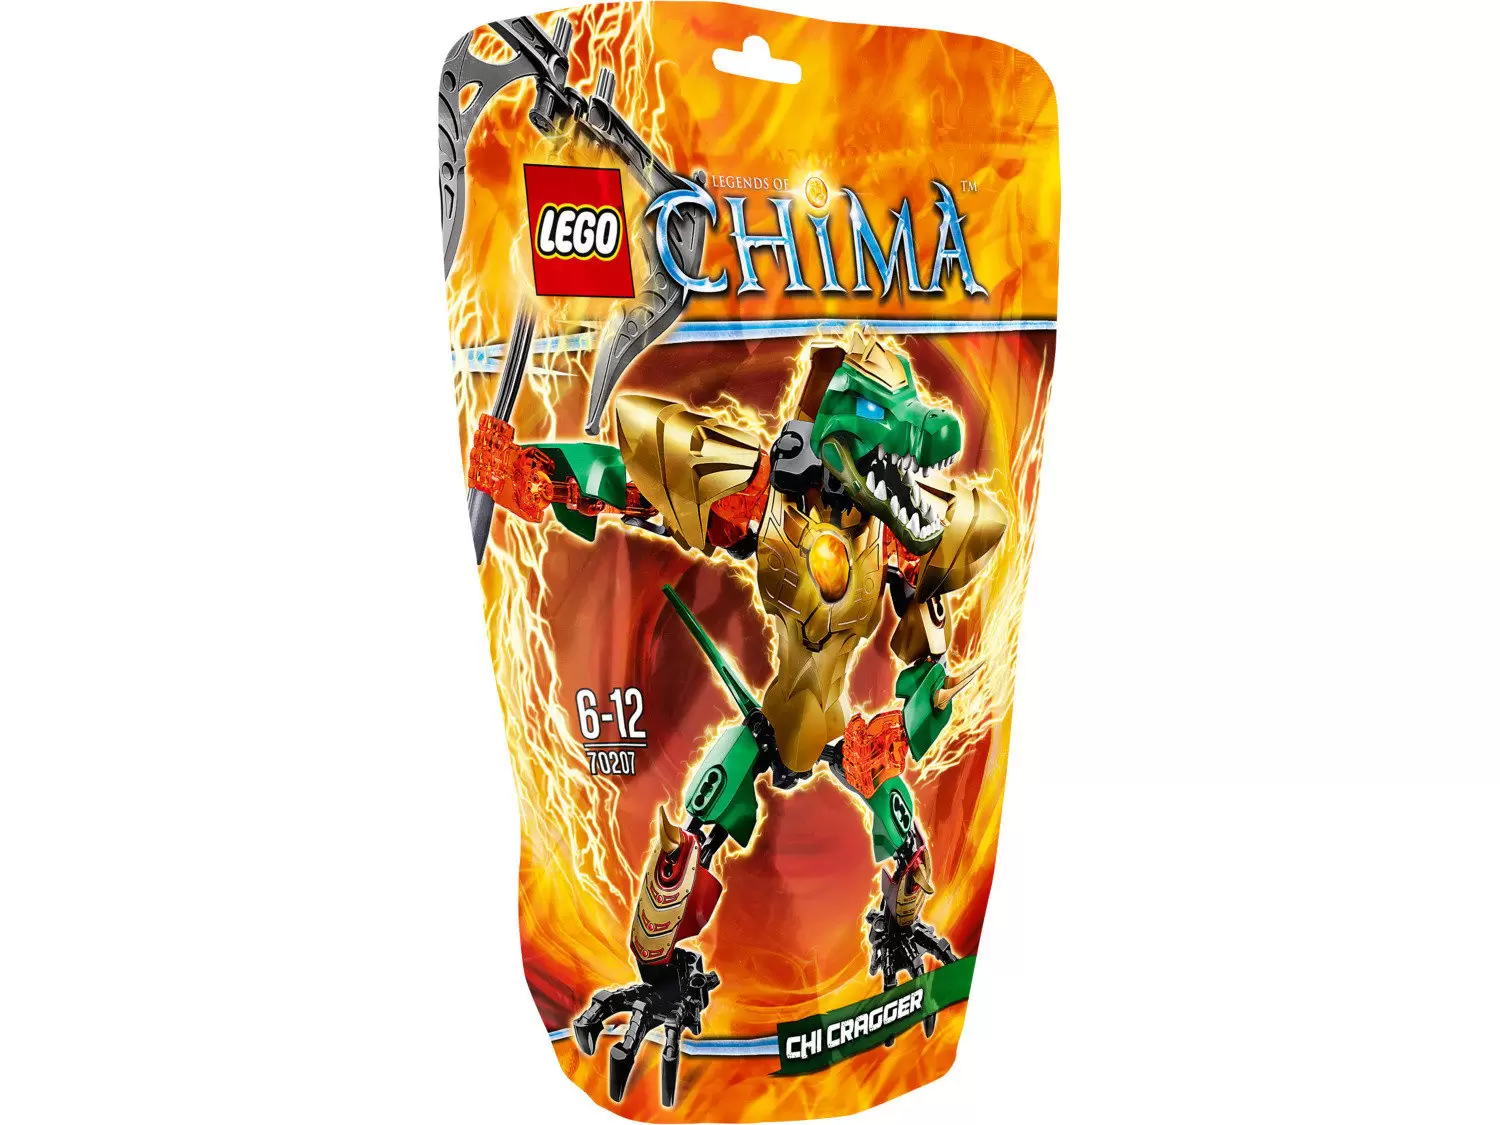 LEGO Legends of Chima - Chi Cragger